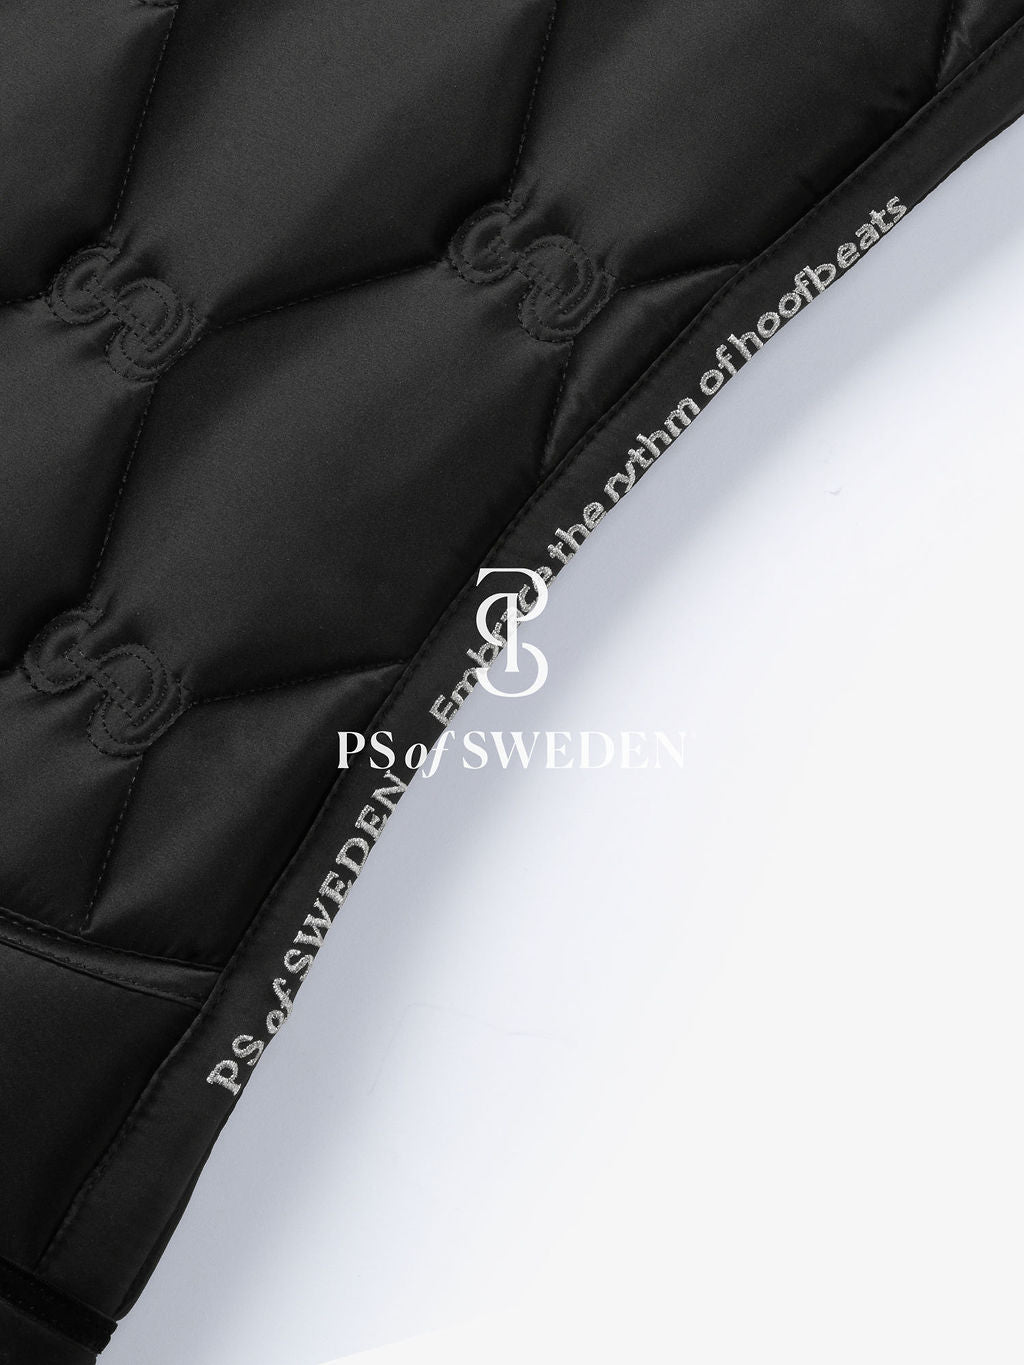 PS of Sweden -  Limited Edition Ruffle Dressage Saddlepad - Black